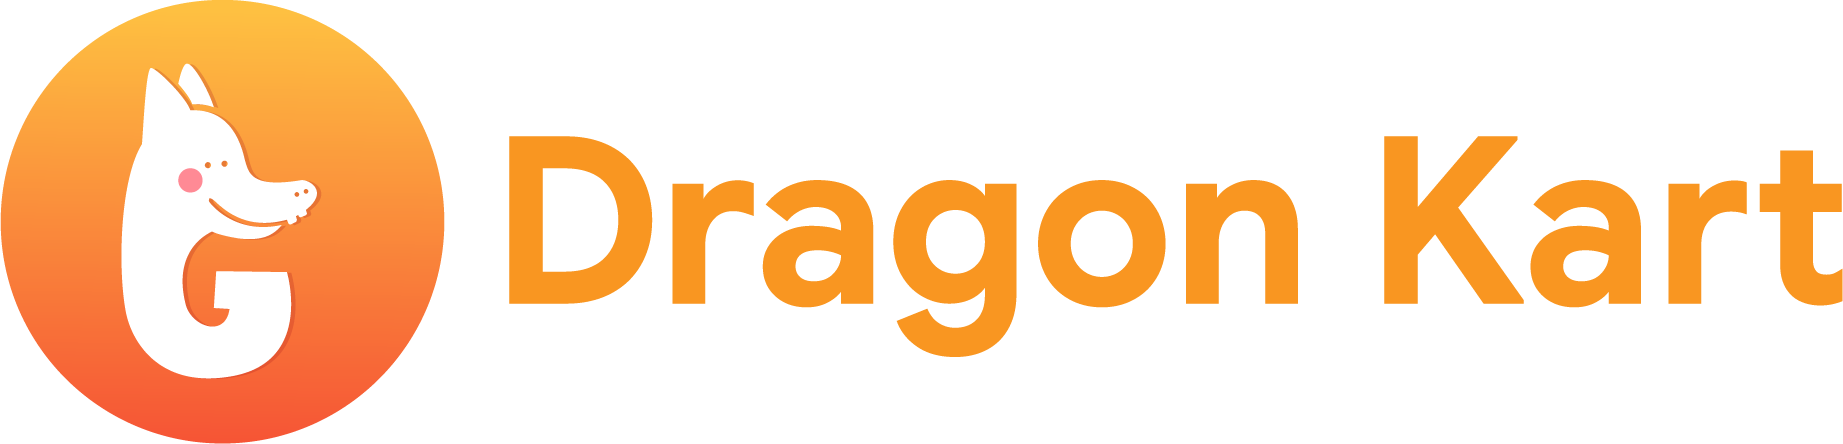 Dragon-Kart-Logo